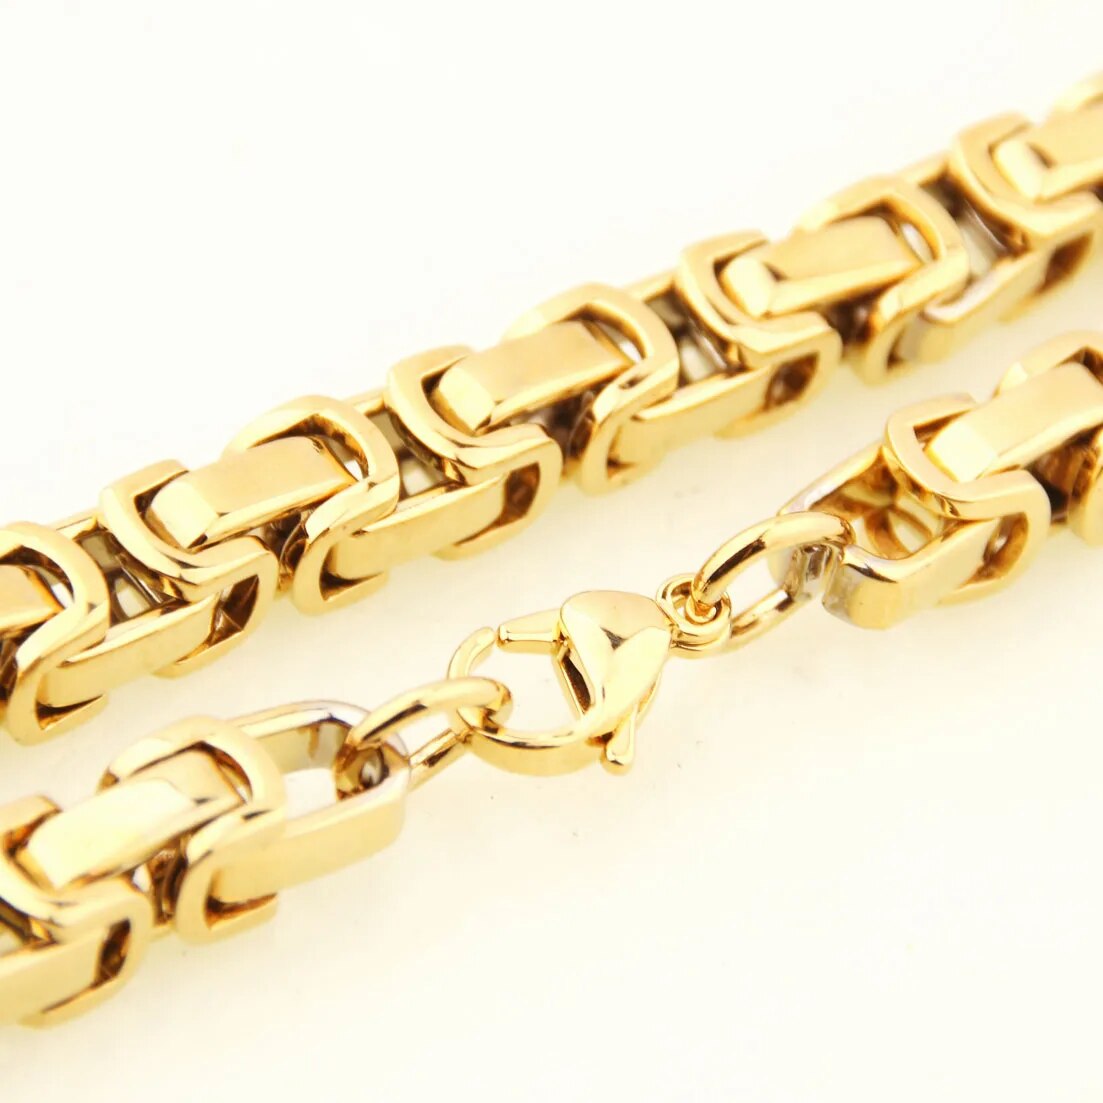 Tisnium-collar de cadena de acero inoxidable para hombre, colgante Punk bizantino, accesorios de joyería masculina, Color dorado, 8mm, nueva moda